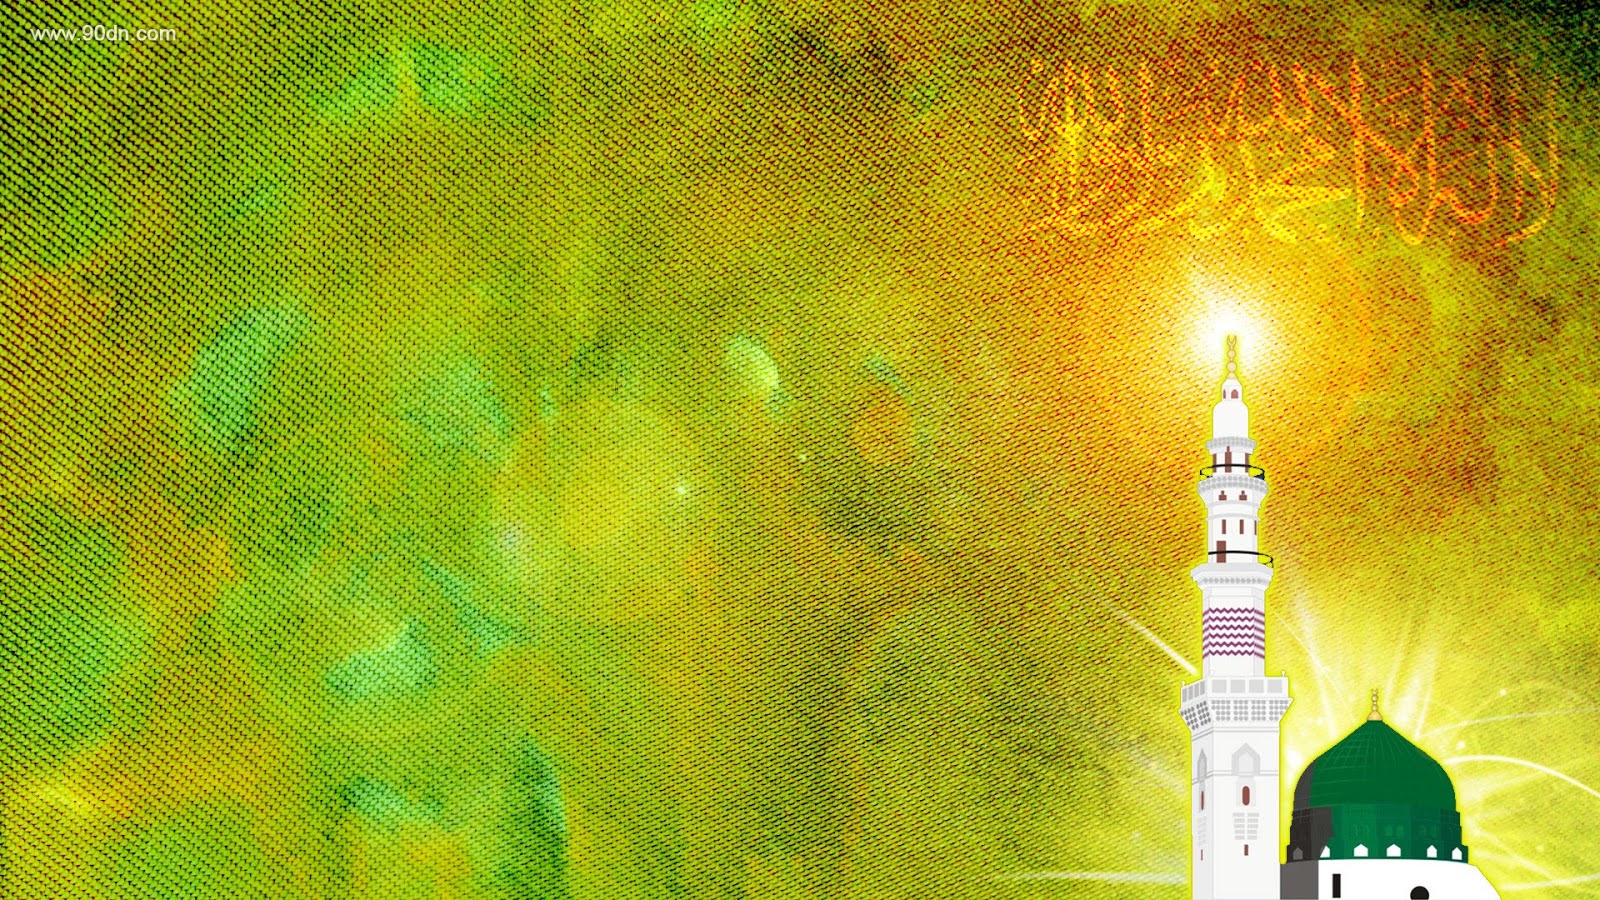 Islami Duniaa: Artificial Islamic HD Wallpaper